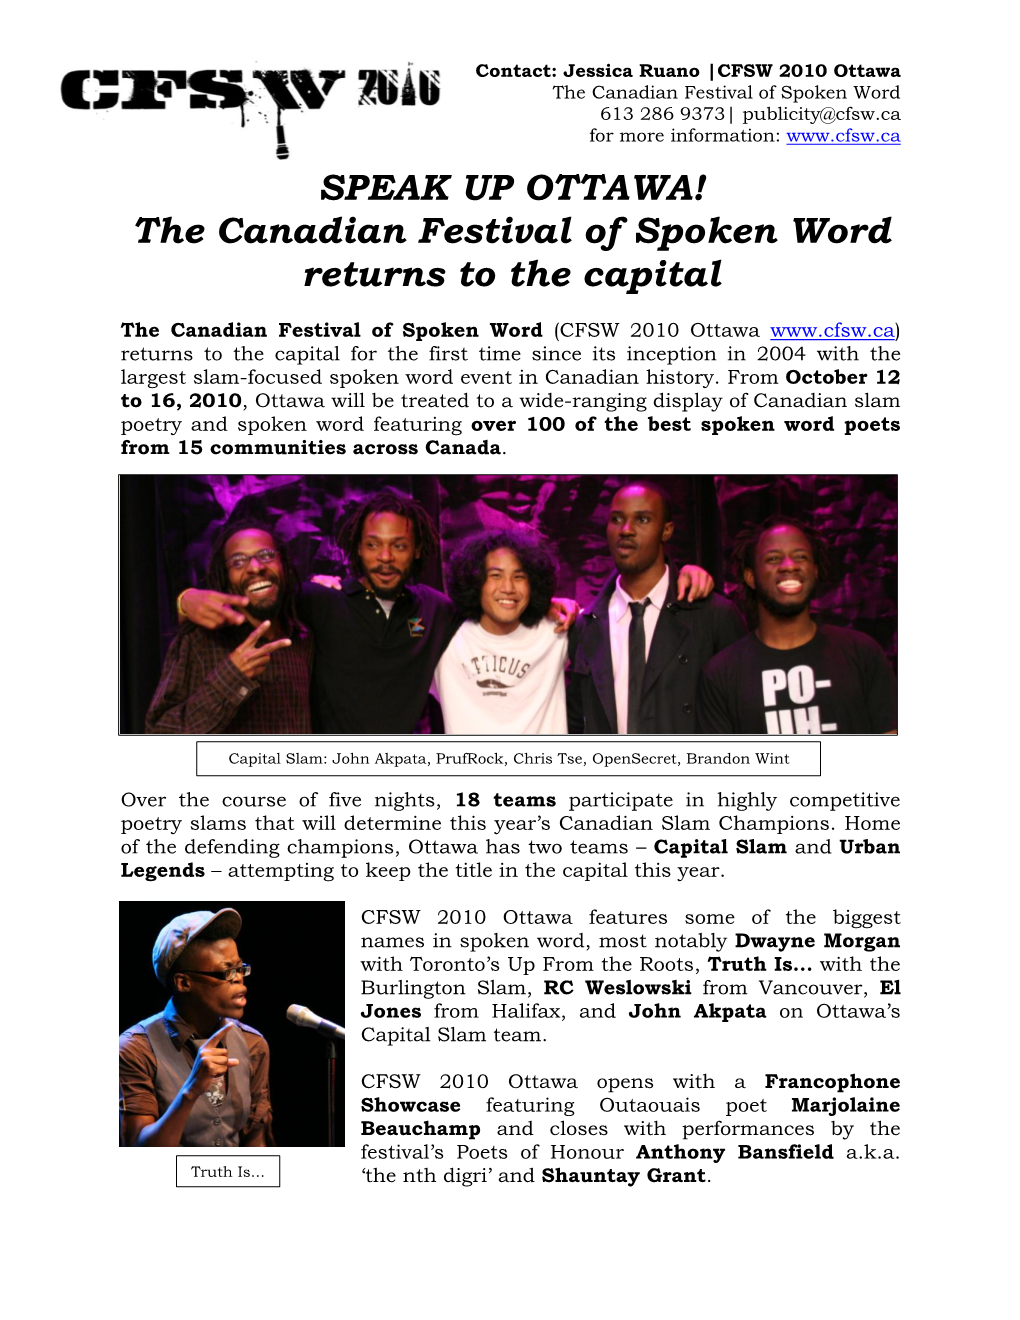 SPEAK up OTTAWA! the Canadian Festival of Spoken Word Returns to the Capital